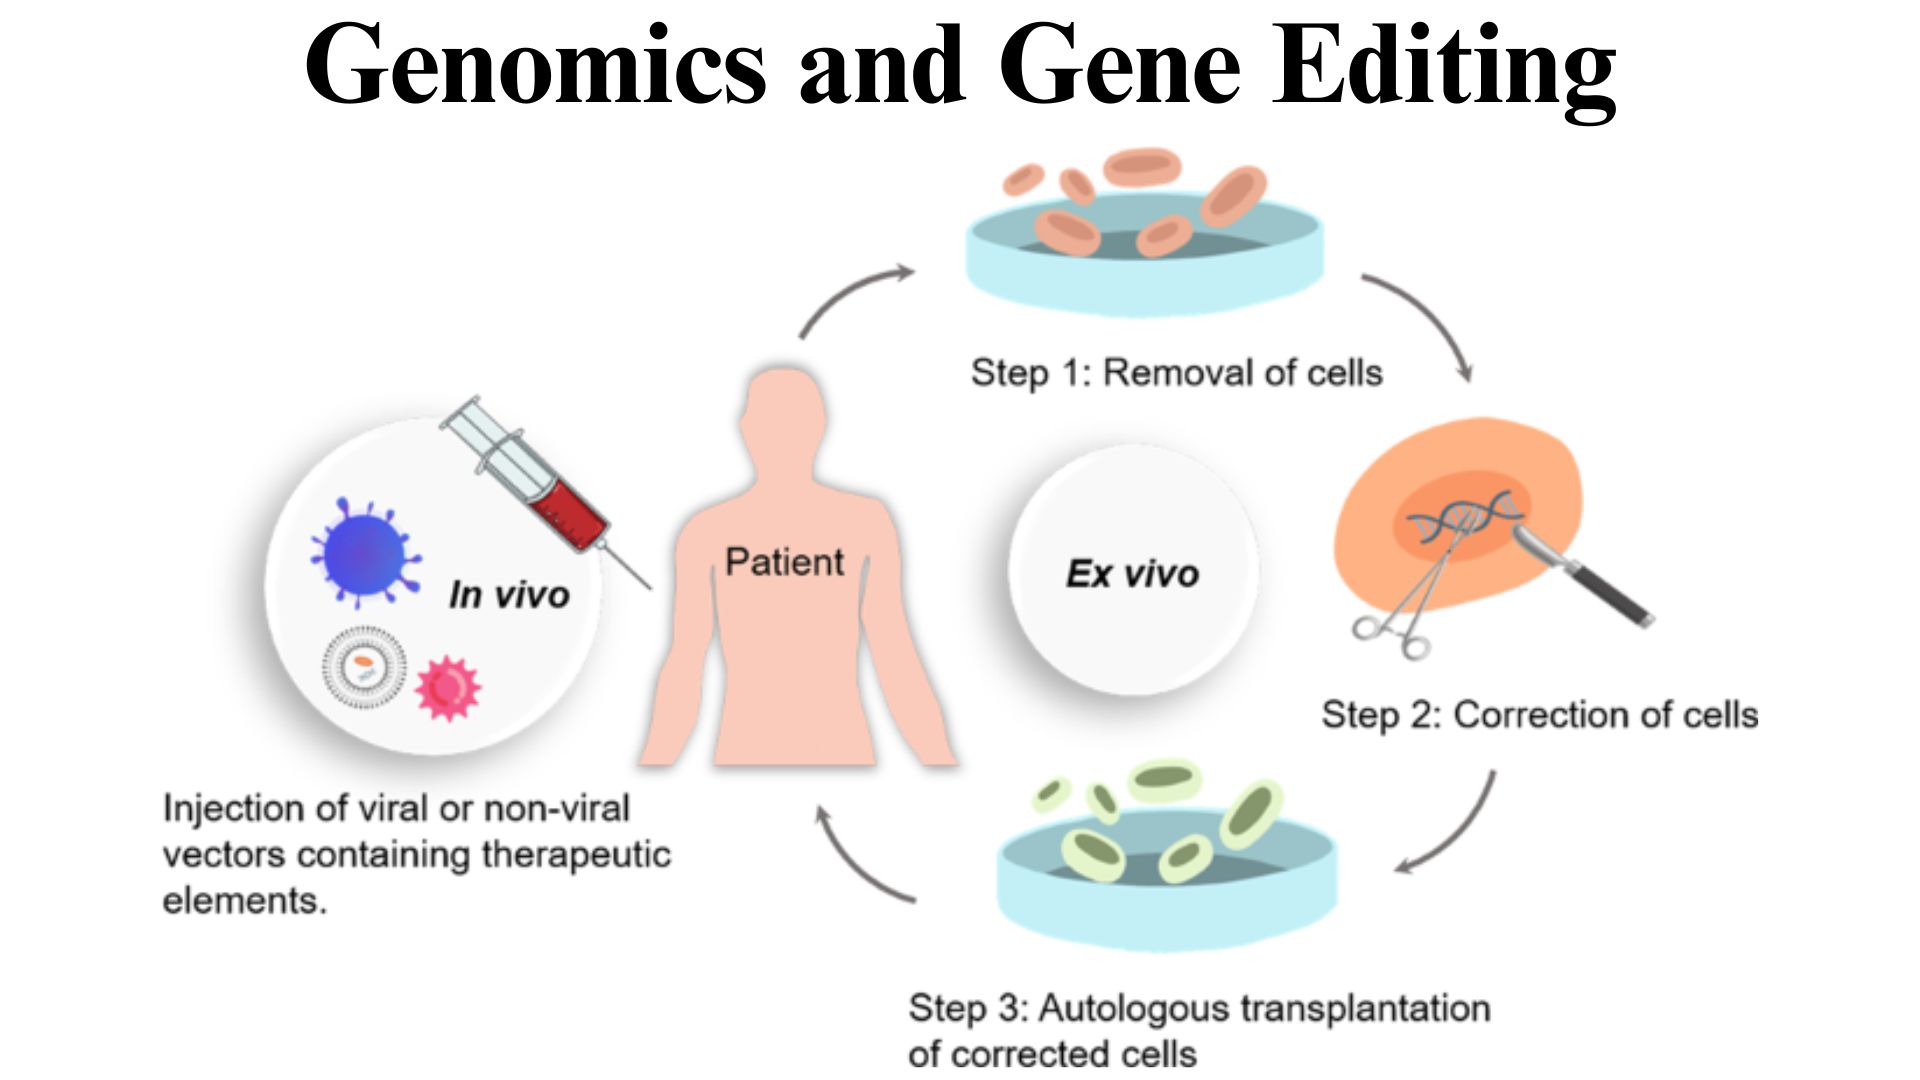 Genomics and Gene Editing